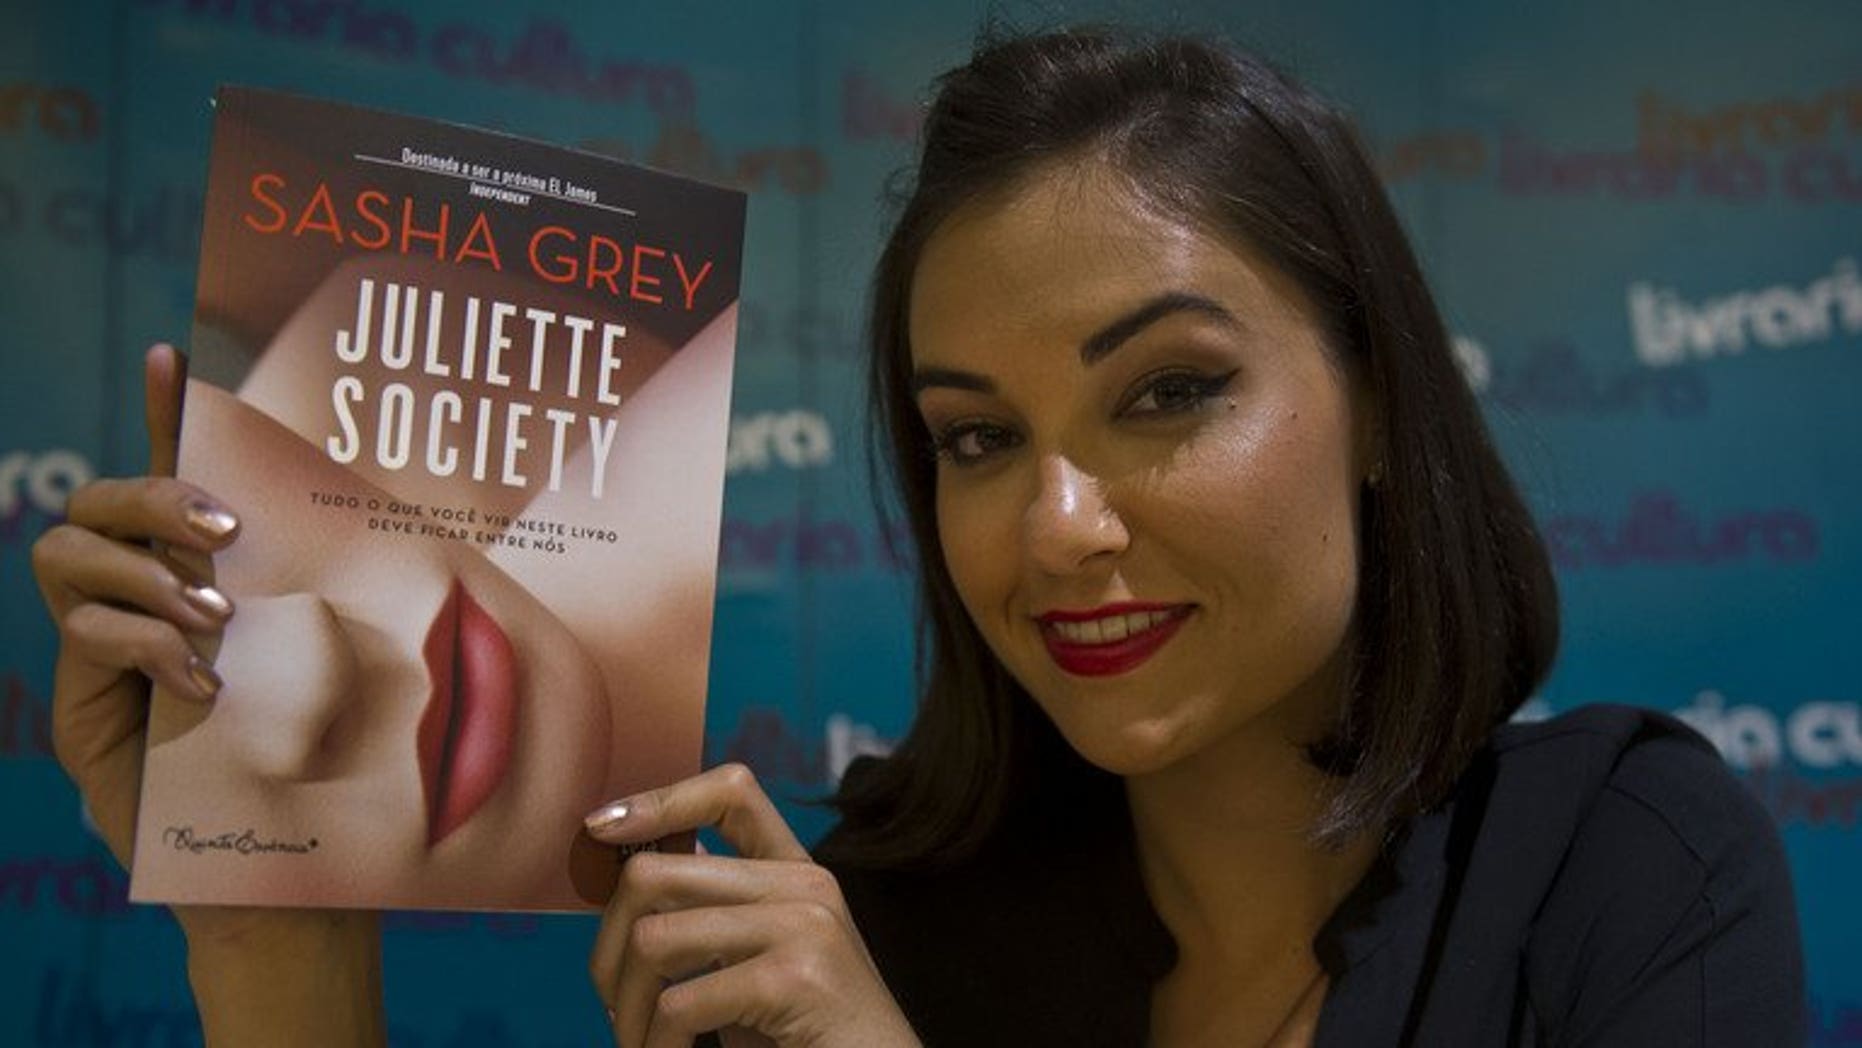 Brazilian Porn 2013 - US ex-porn star in Brazil to promote new erotic book | Fox News